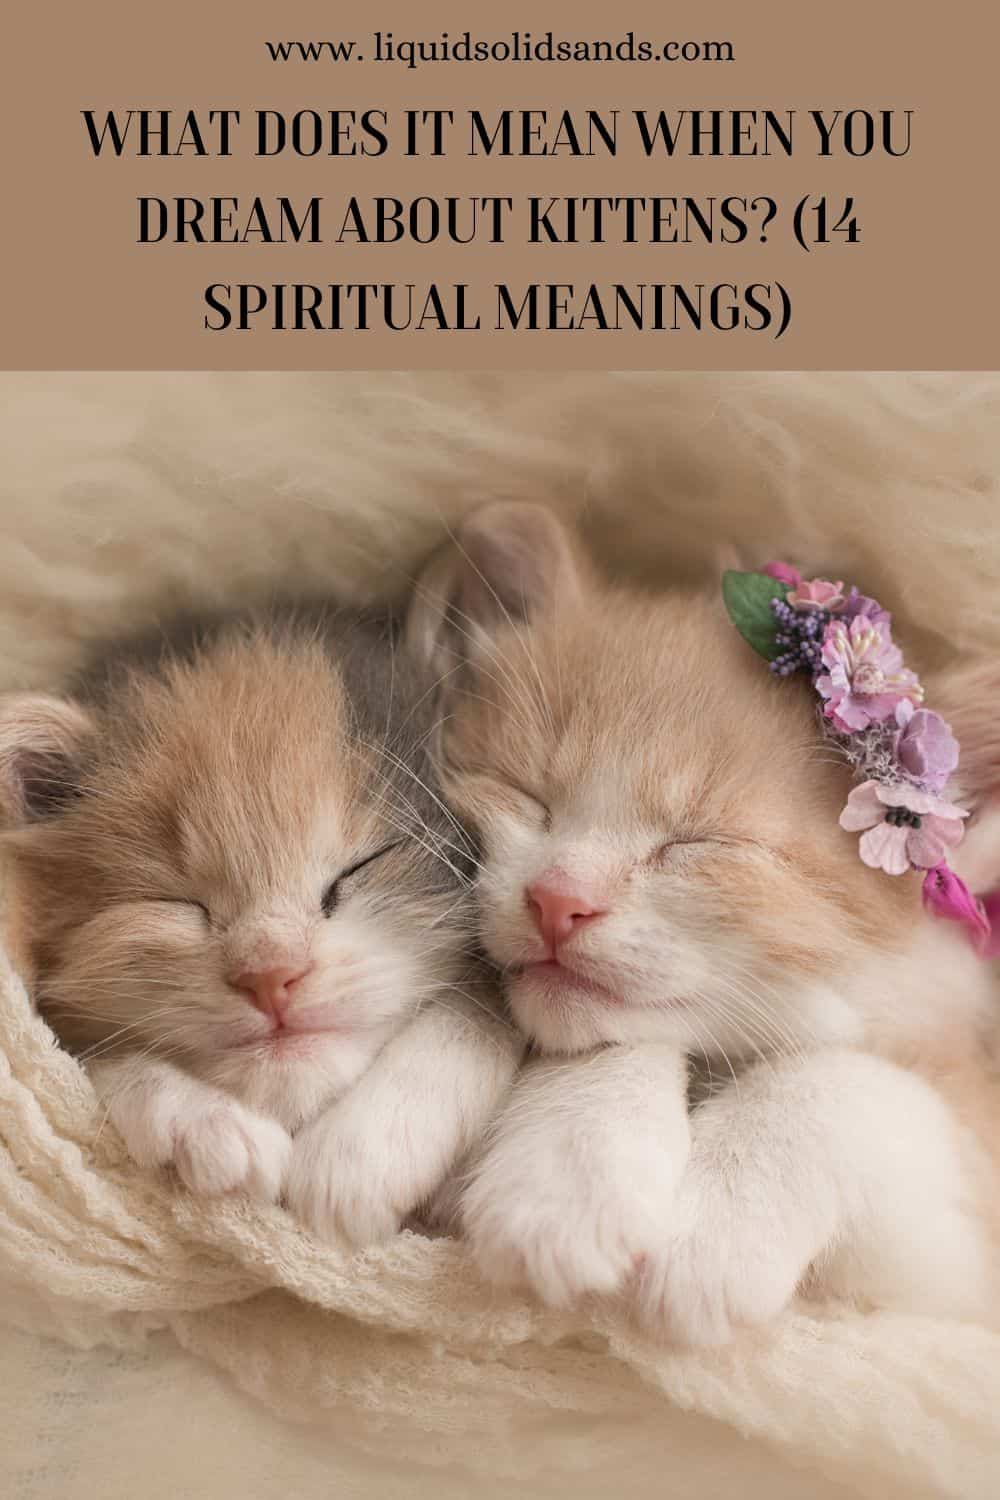  Hvad betyder det, når du drømmer om killinger? (14 spirituelle betydninger)